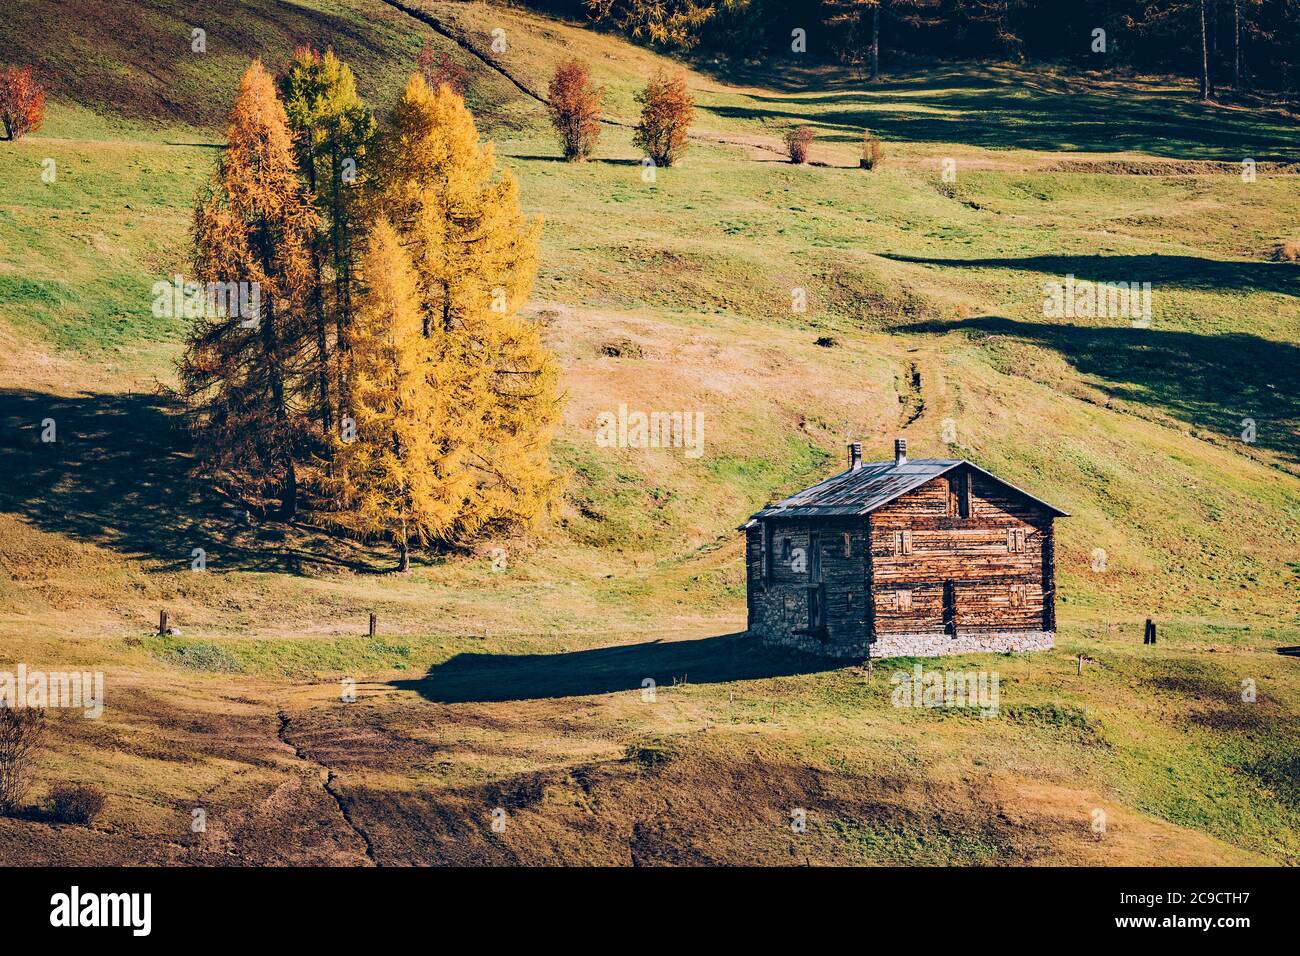 Livigno - Valtellina (IT) - Typical mountain hut in autumn environment Stock Photo